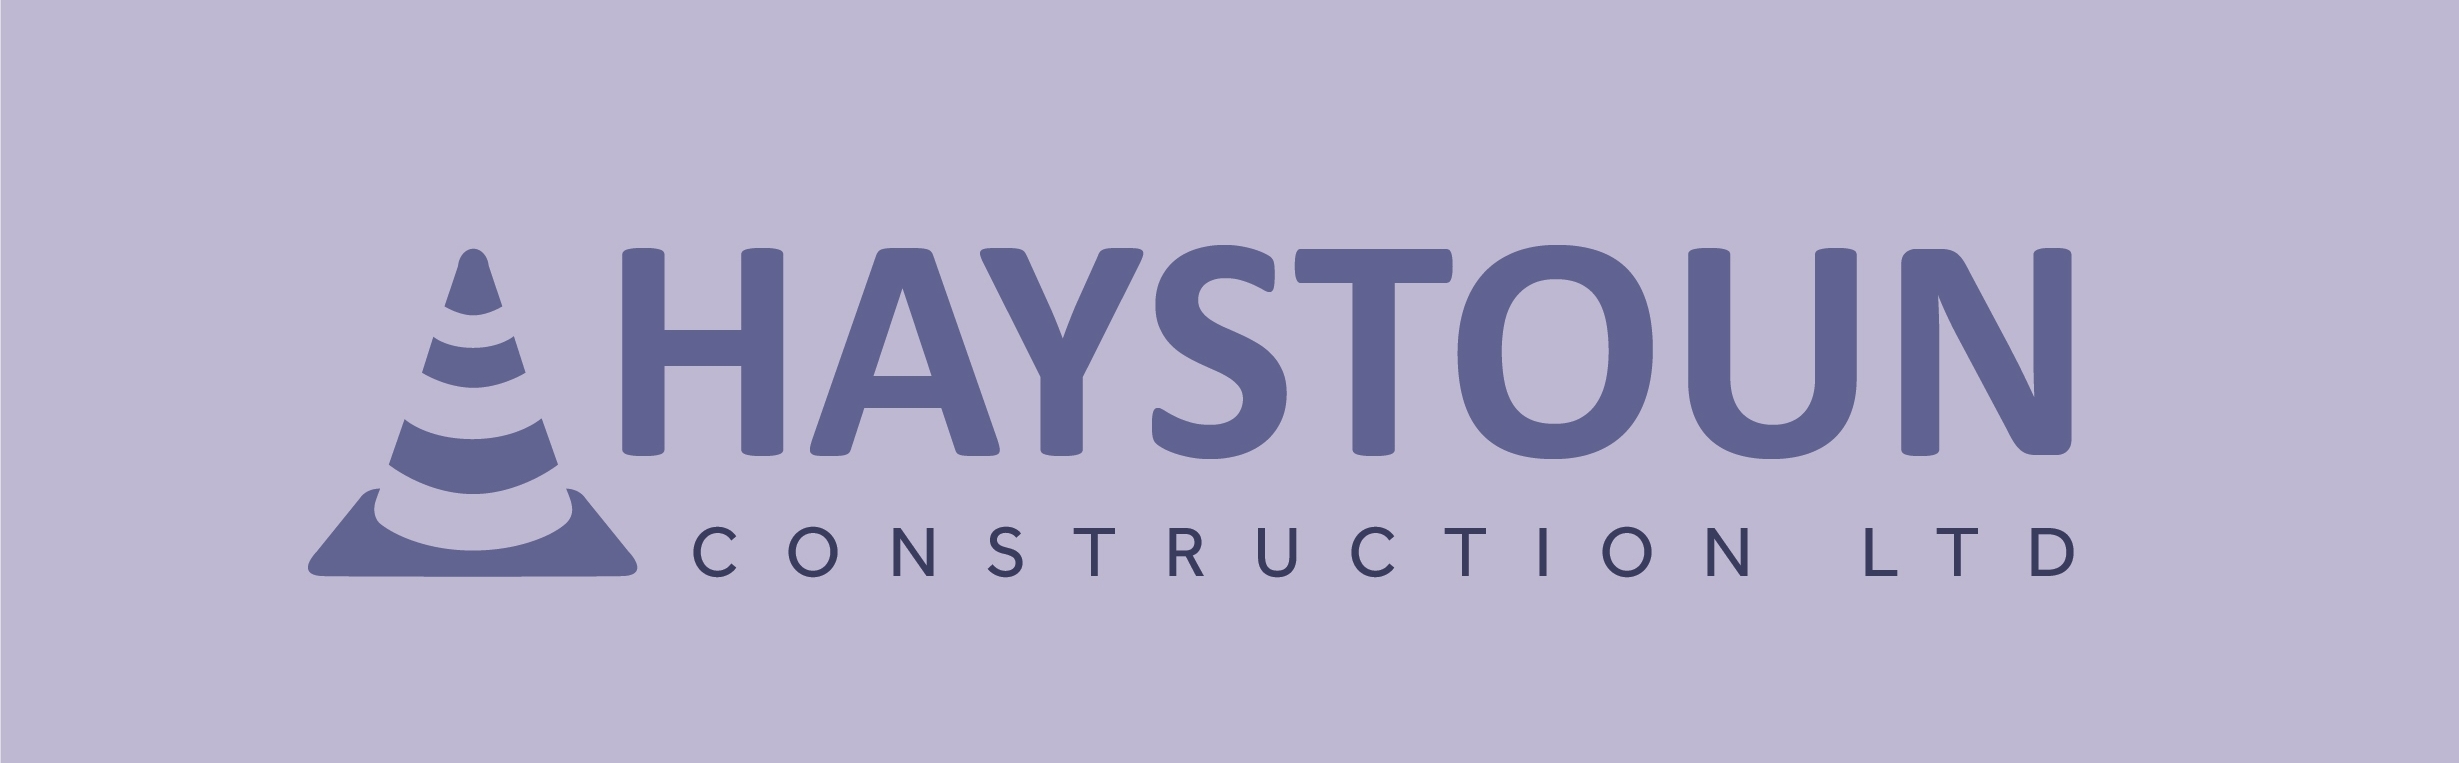 HAYSTOUN CONSTRUCTION